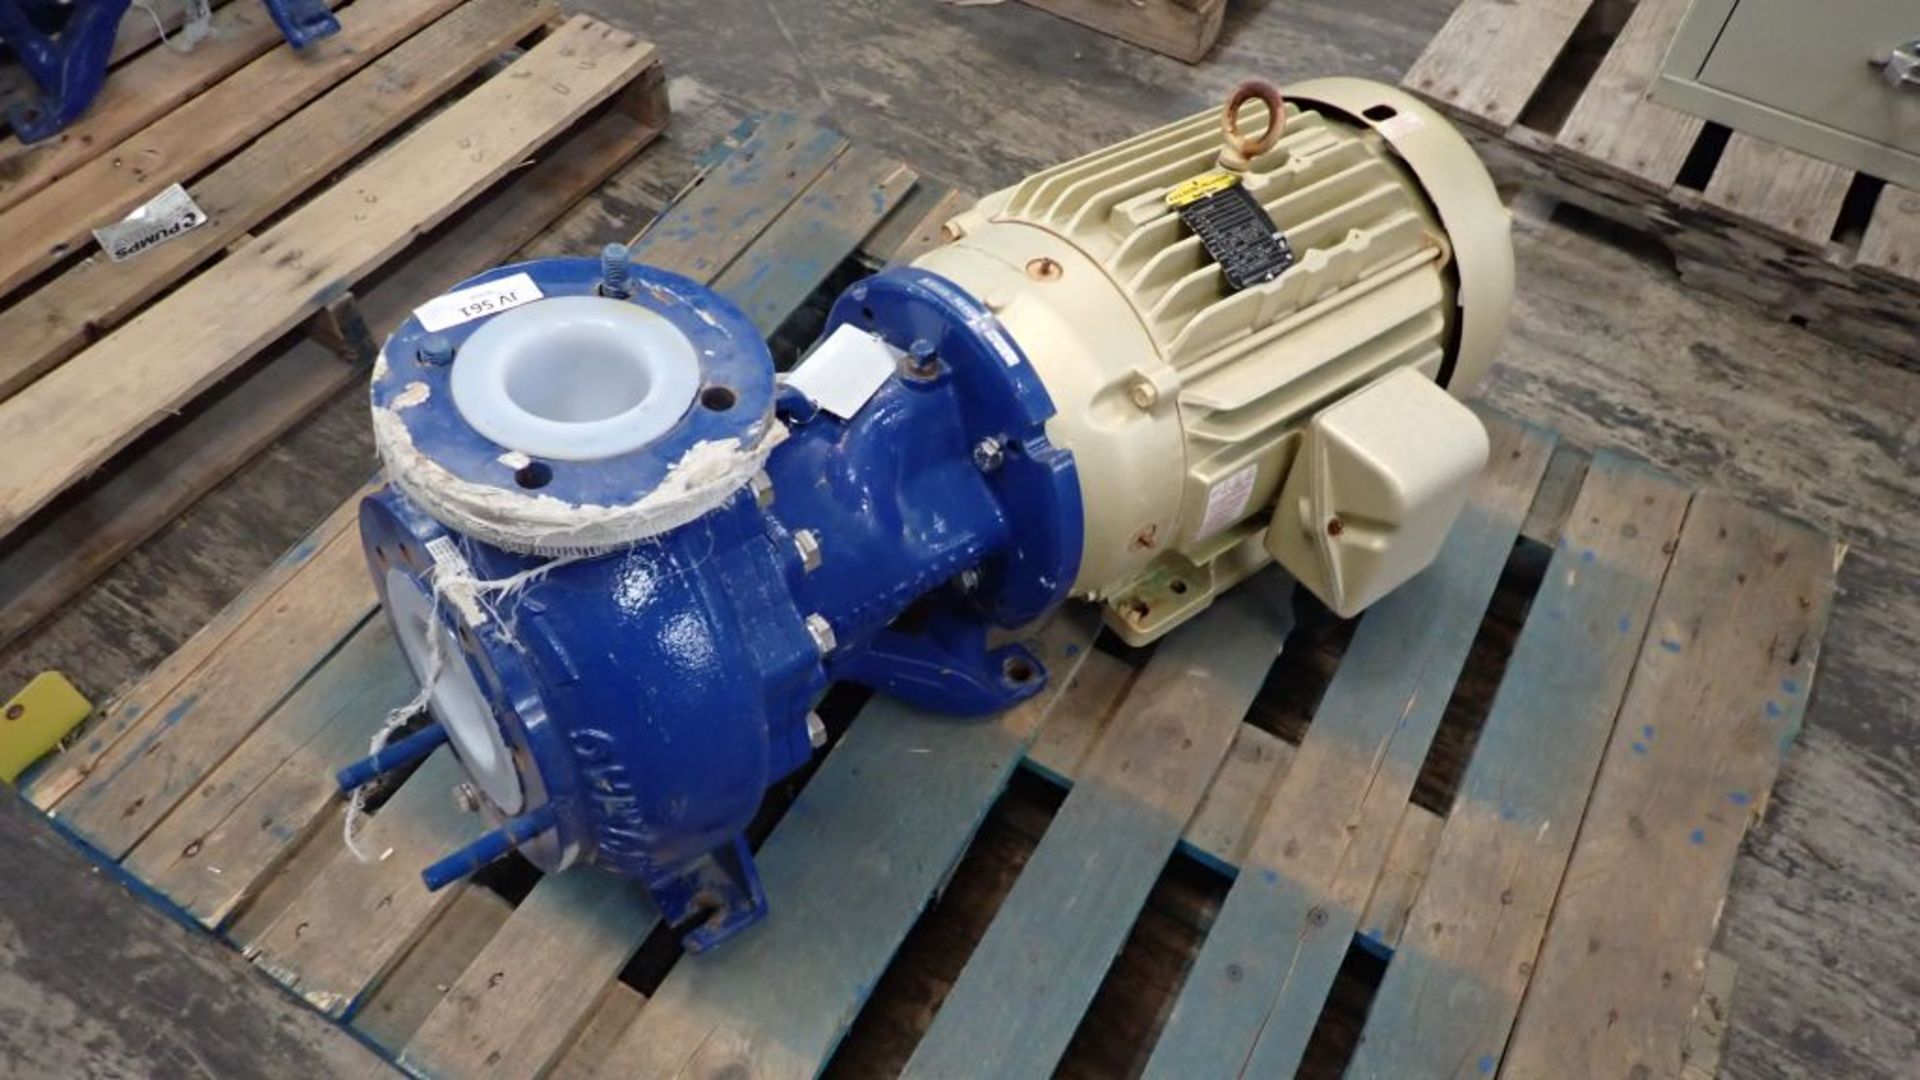 Flowserve Imnomag Sealless Pump w/Baldor 20 HP Motor | Pump Part No. B665011100-BF0, Imp. Dia/Max